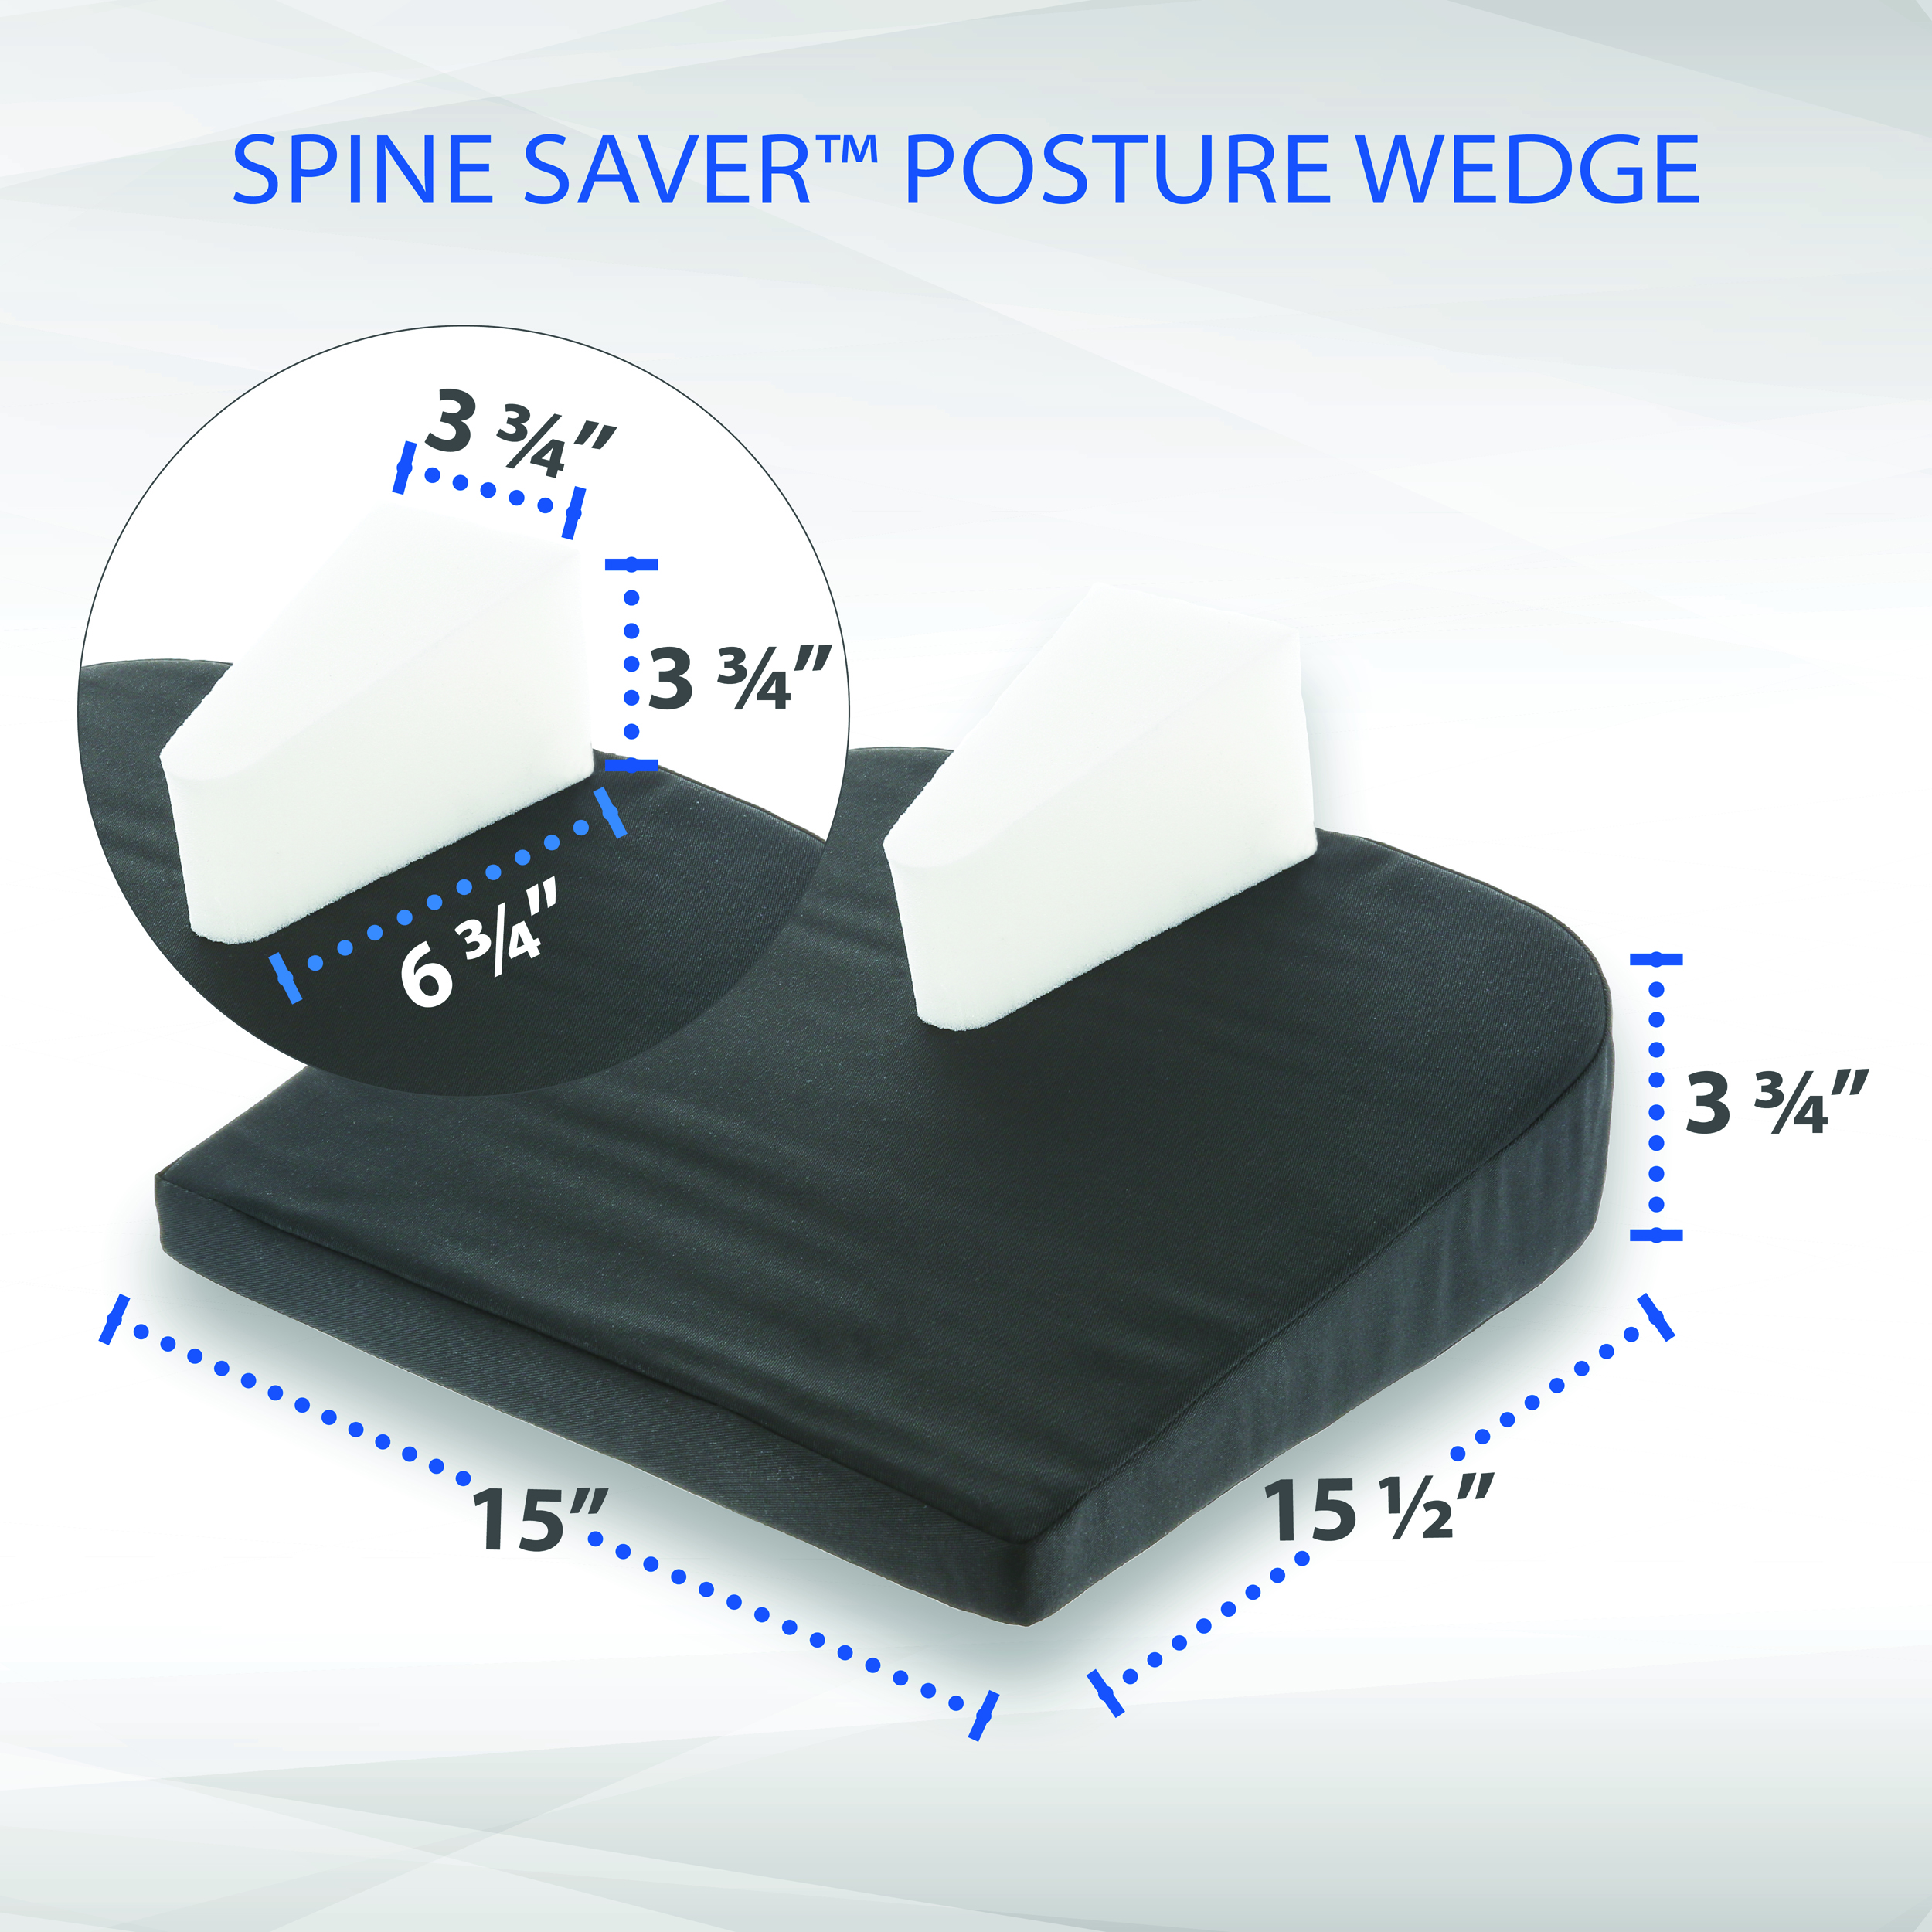 Spine Saver Posture Wedge